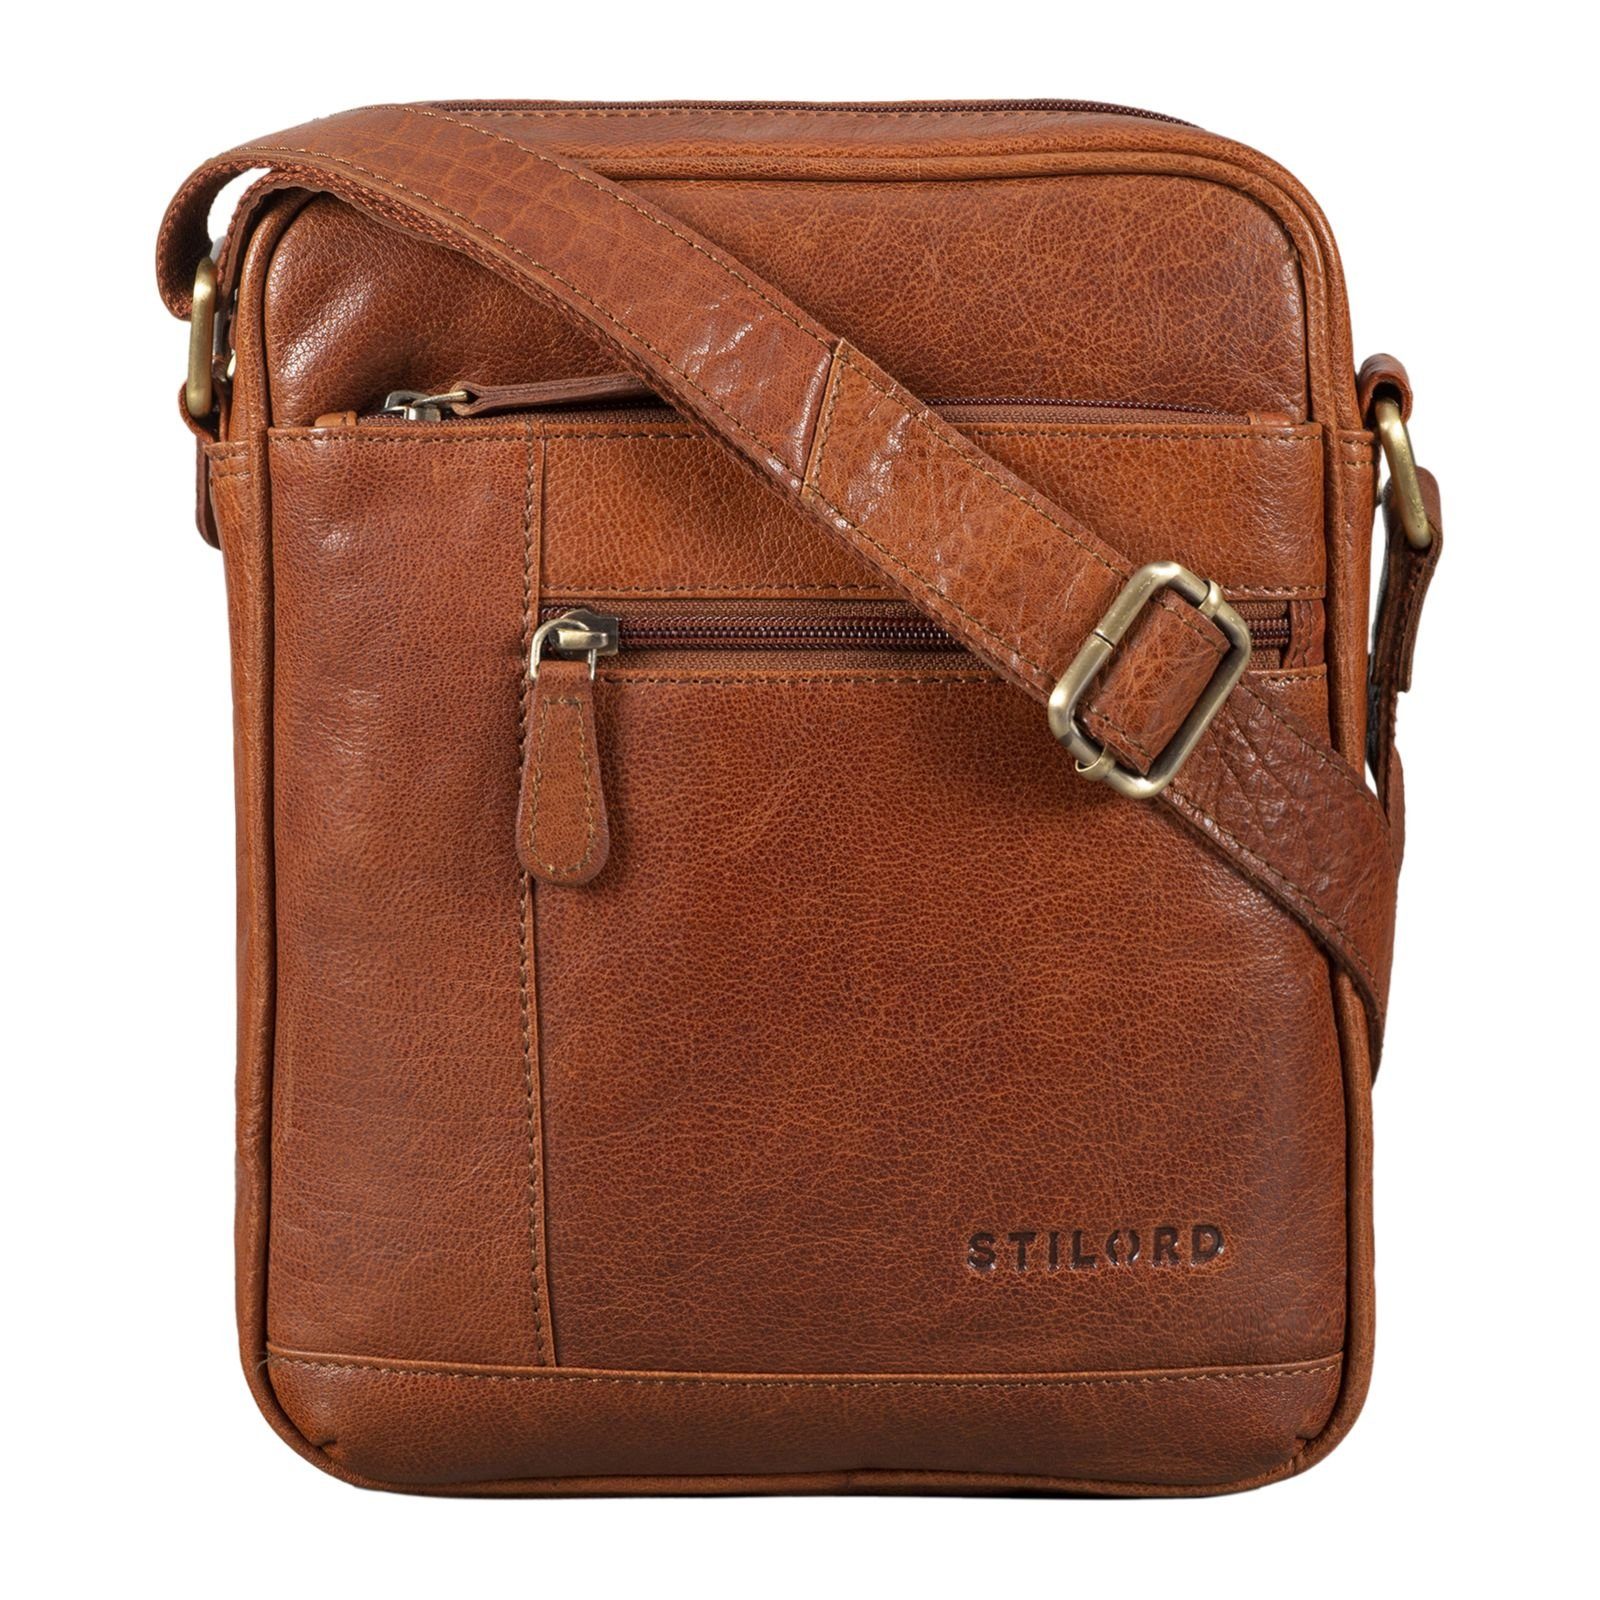 Bag klein braun maraska Vintage Messenger Leder Herrentasche - "Diego" STILORD